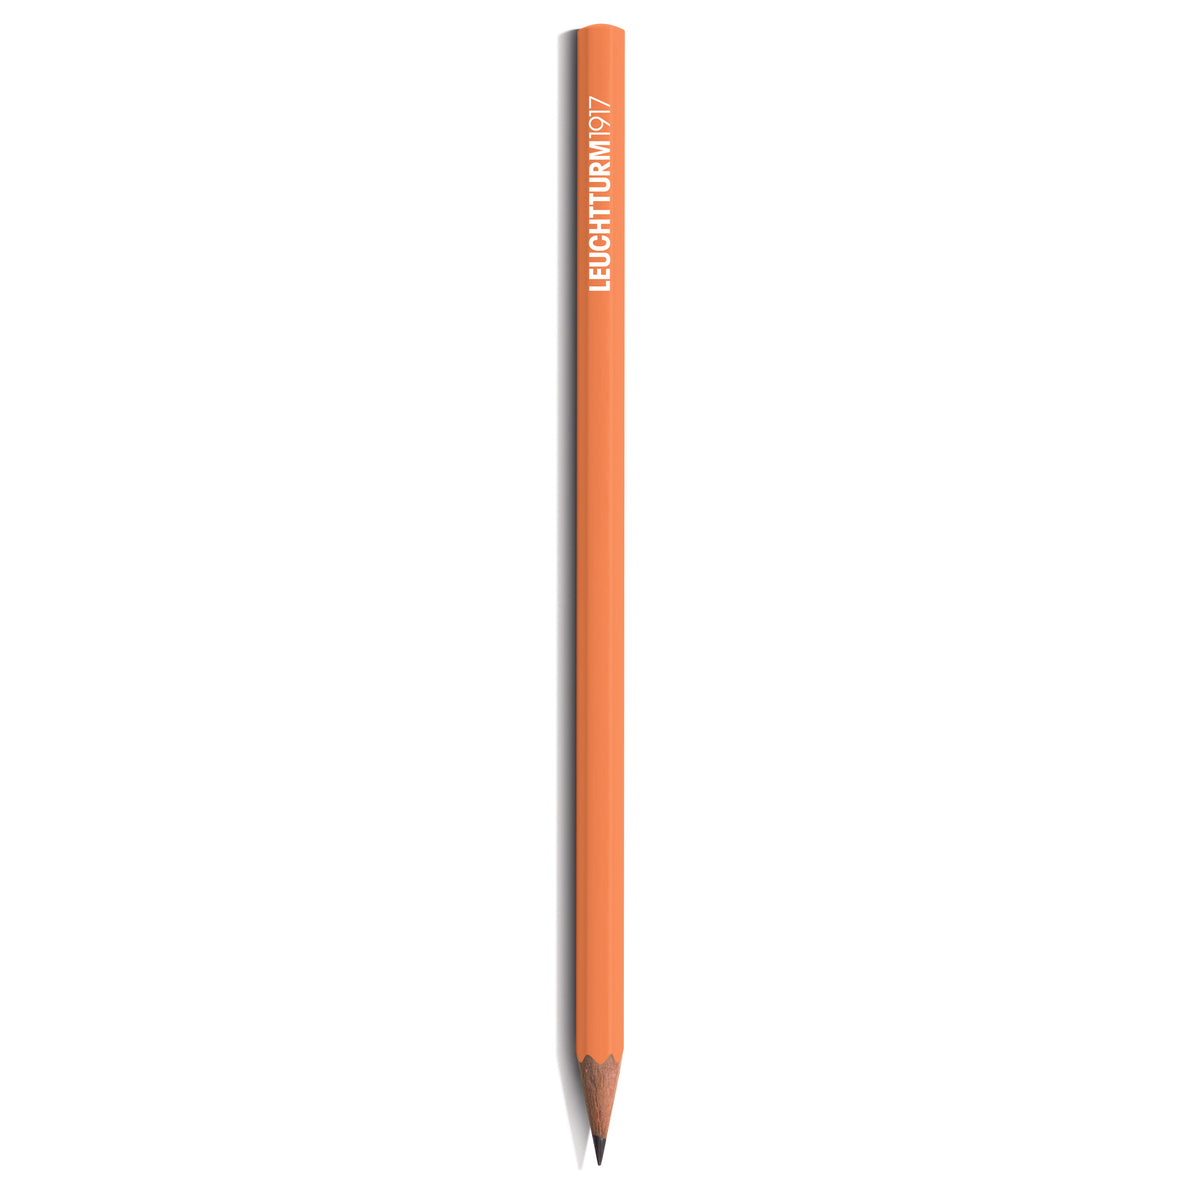 LEUCHTTURM1917 HB Pencil in apricot